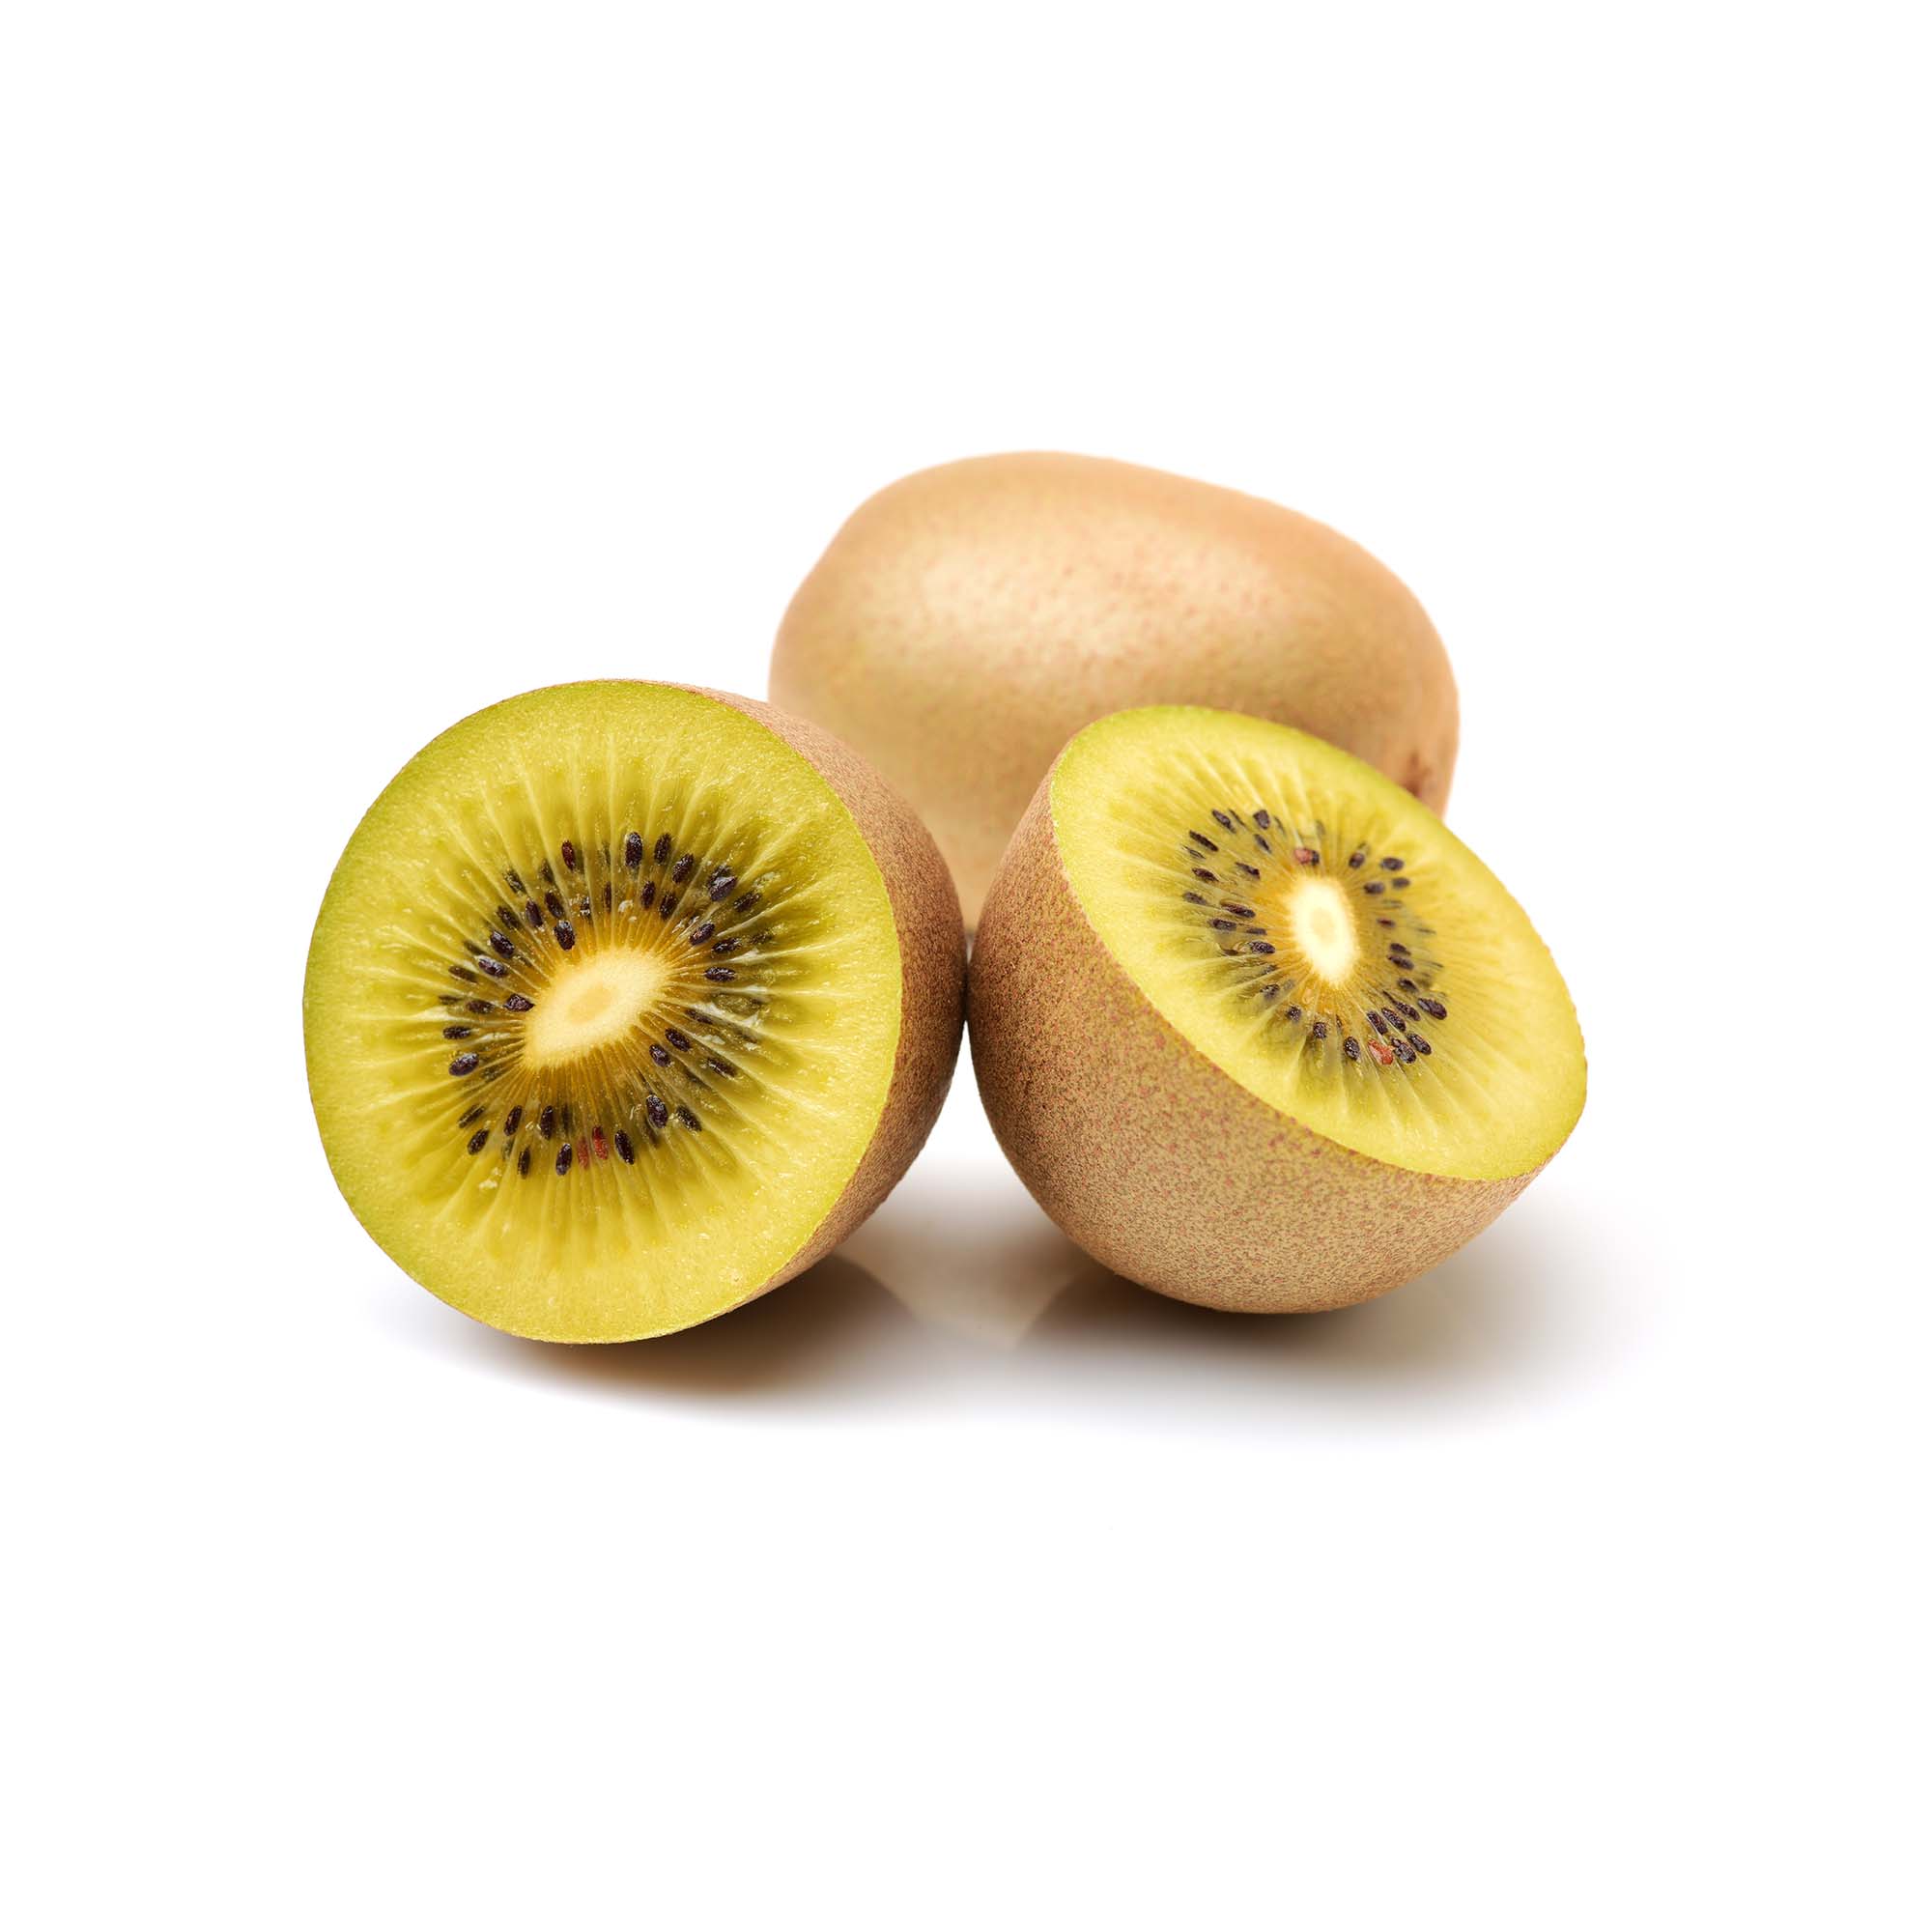 Rare Now Fruit, Buy Golden Kiwi - Fruits UK Delivery Exotic Exotic Online –